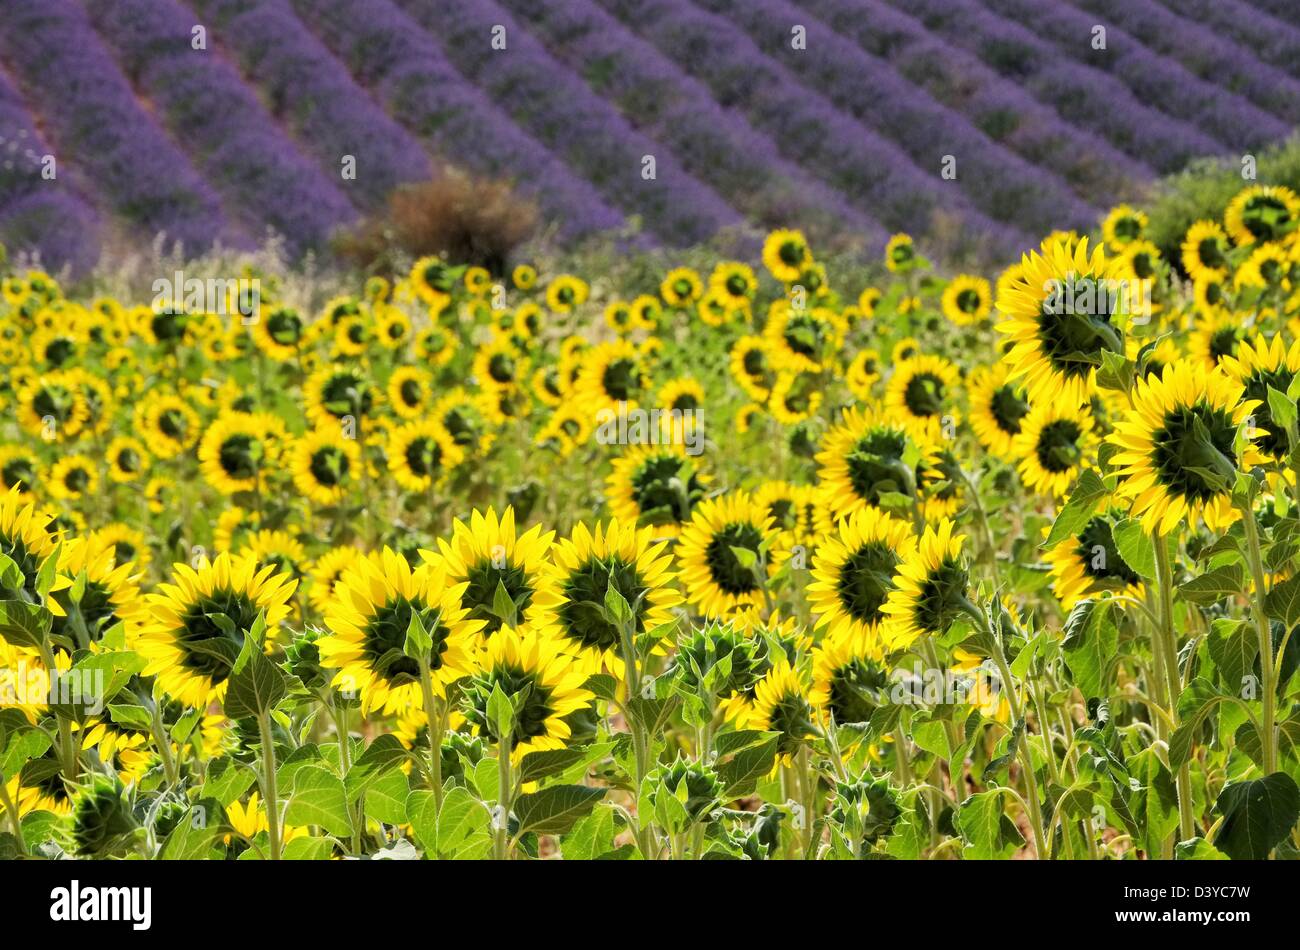 Lavendel und Sonnenblumen - lavender and sunflowers 08 Stock Photo